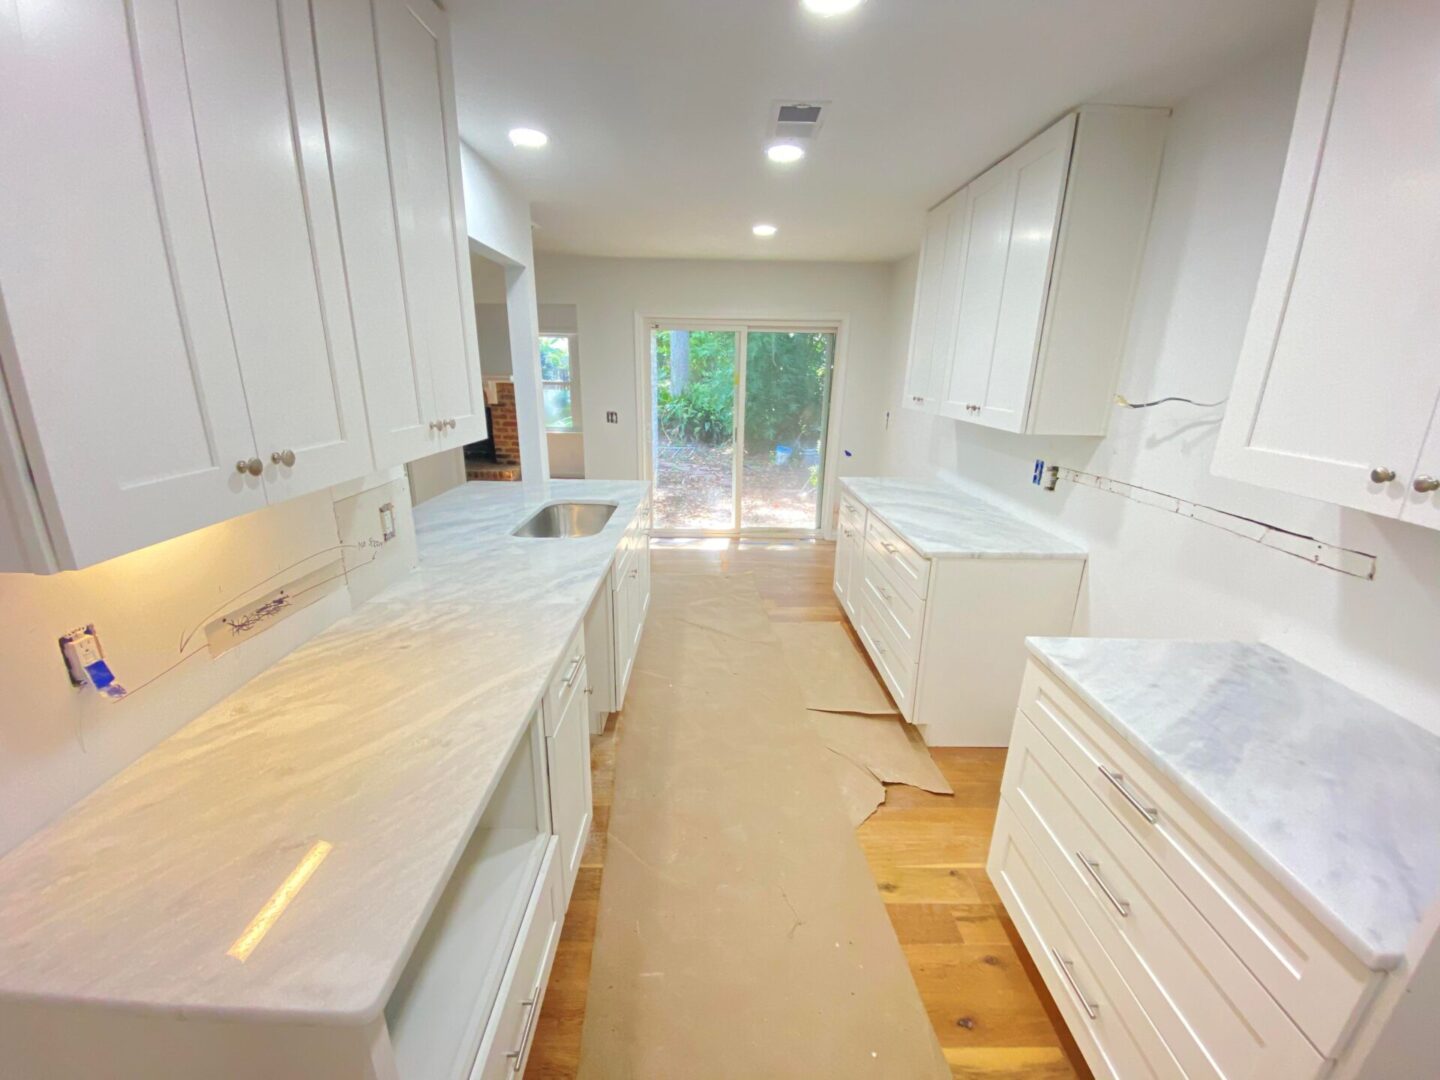 A modern kitchen under construction with white interiors